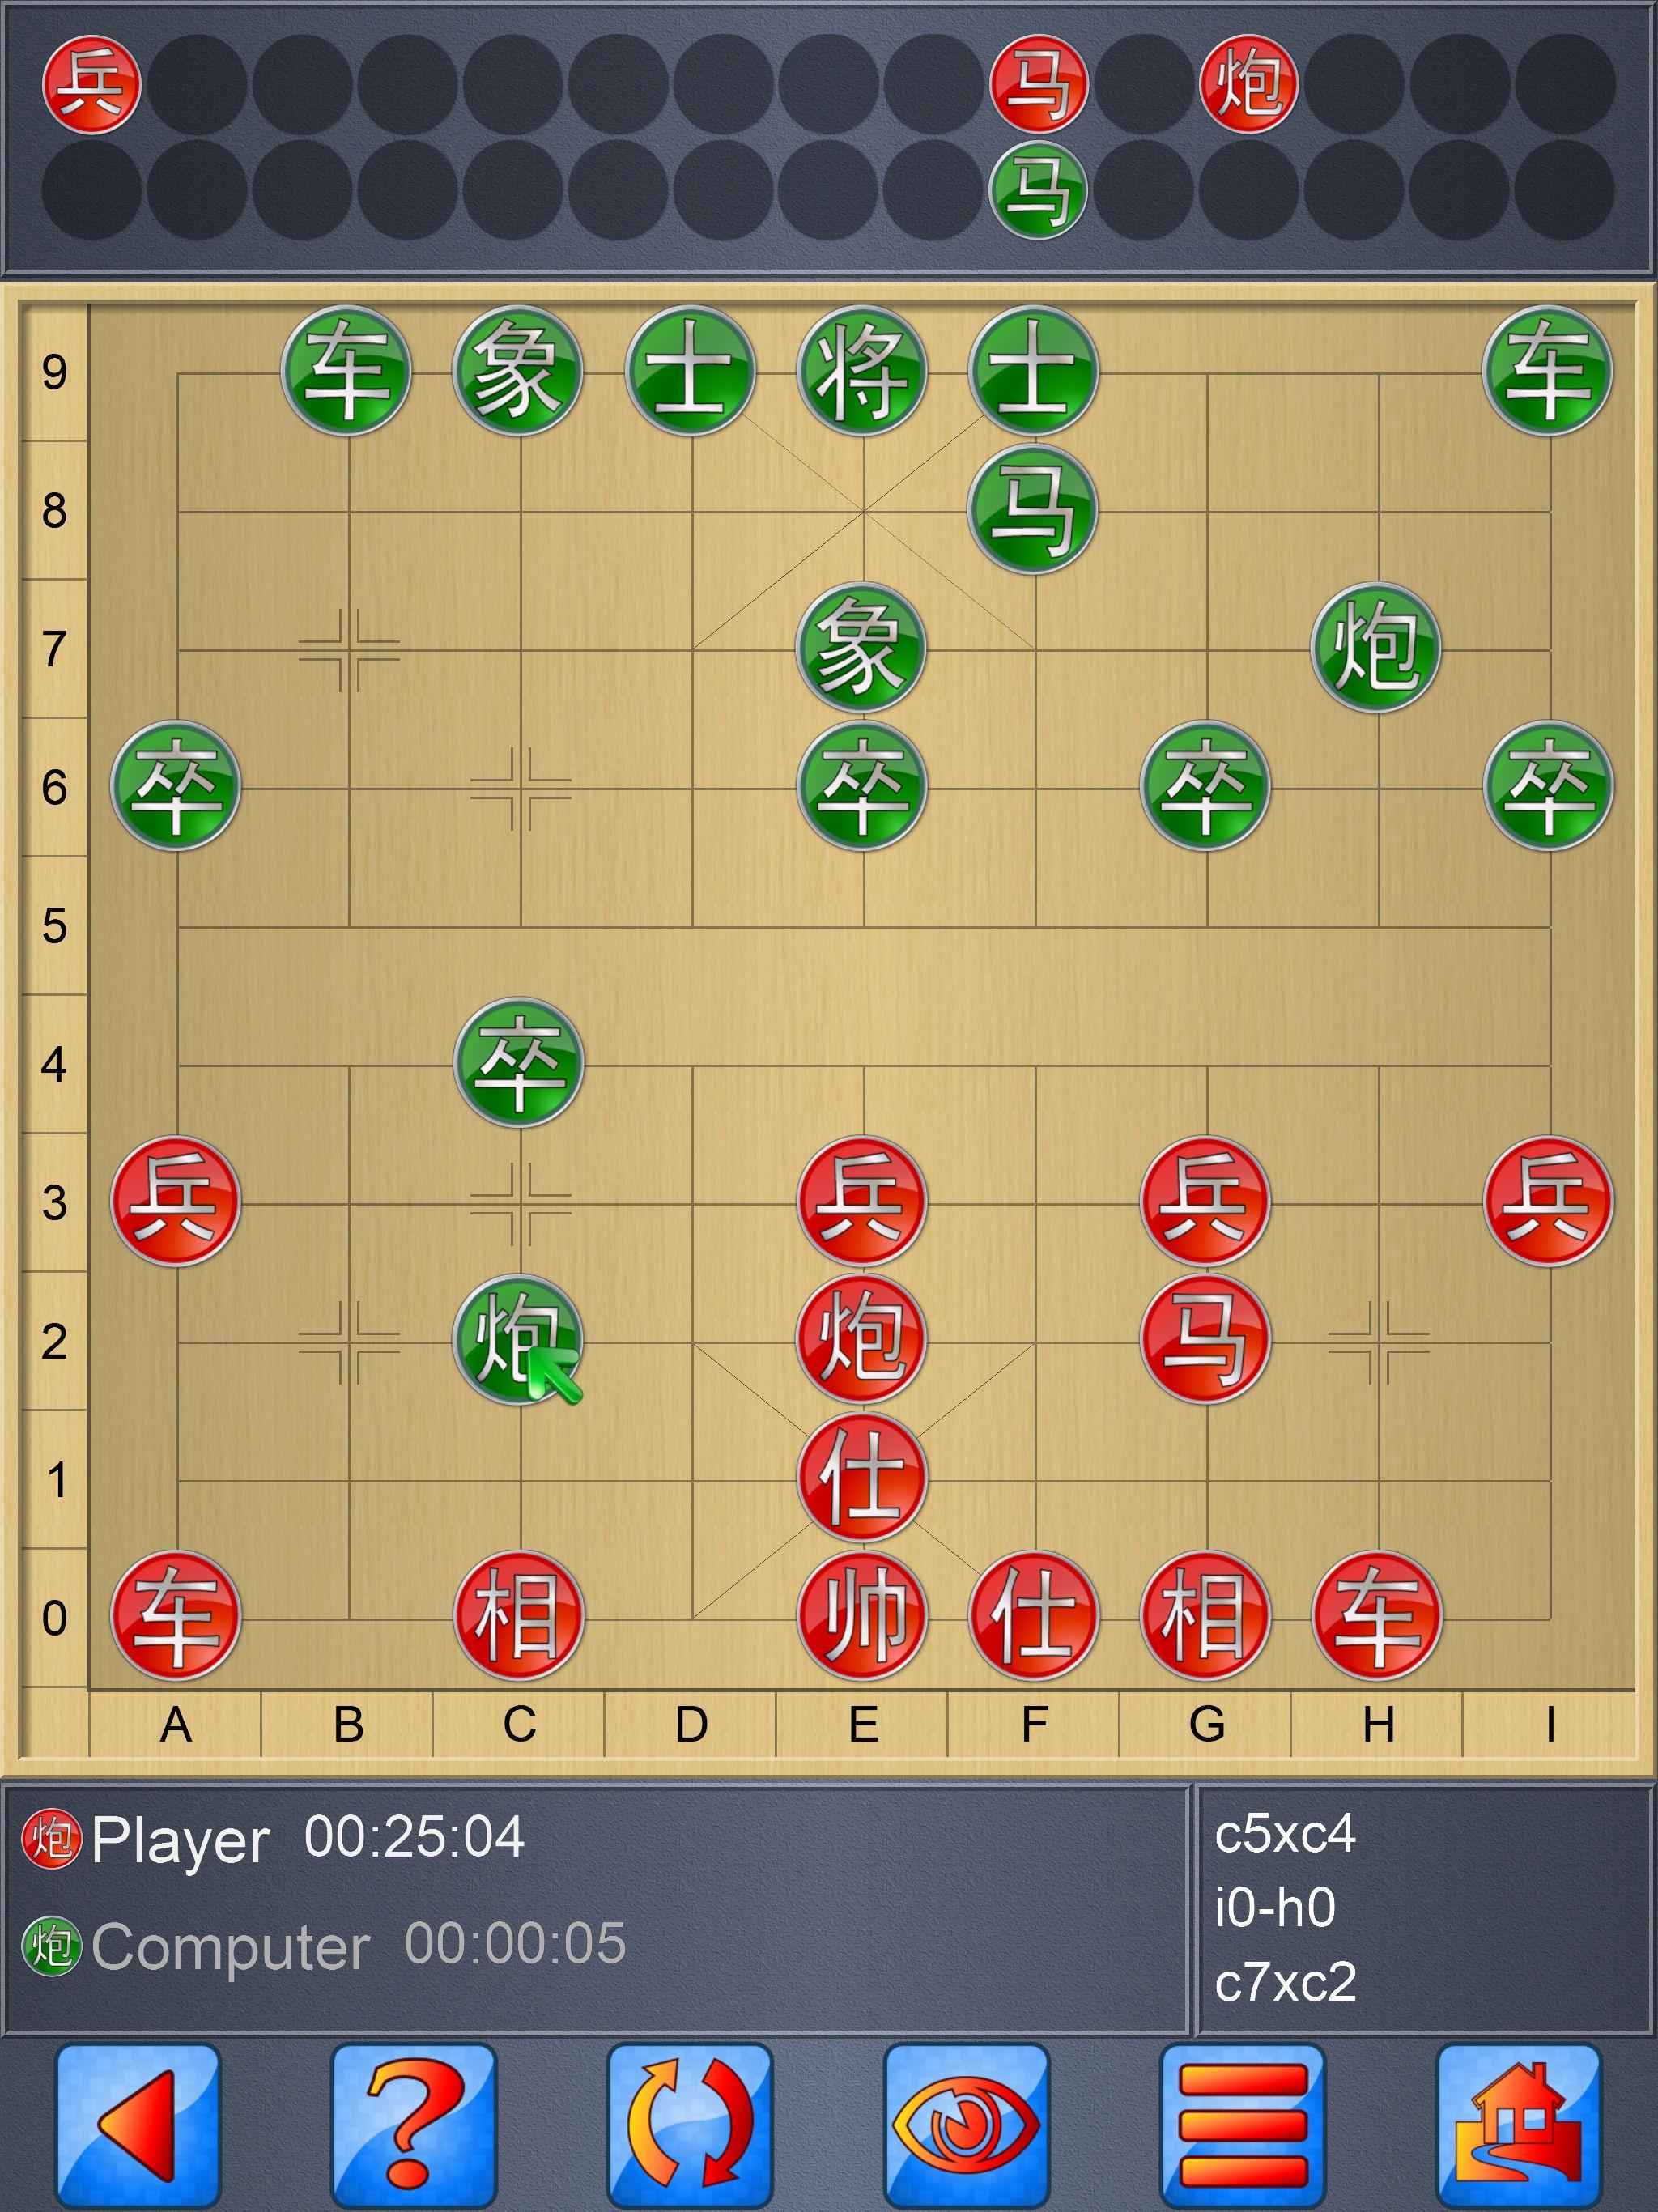 Chinese Chess V+, multiplayer Xiangqi board game 5.25.65 Screenshot 10